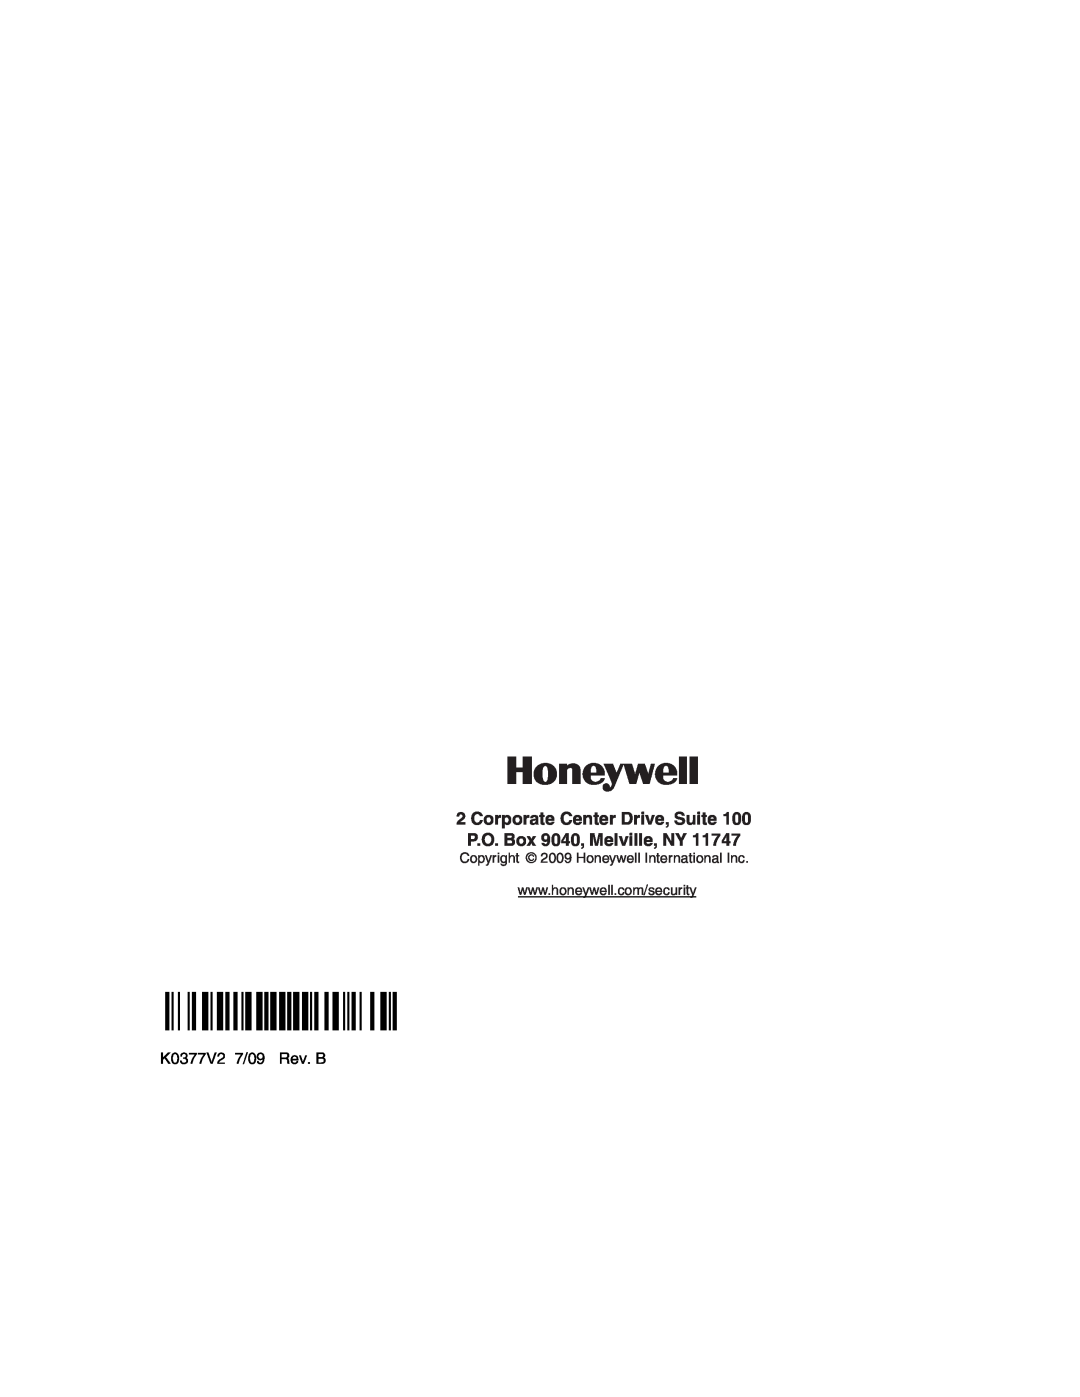 Honeywell VISTA-250FBP, VISTA-128FBP manual ÊK0377V2eŠ, Corporate Center Drive, Suite, P.O. Box 9040, Melville, NY 